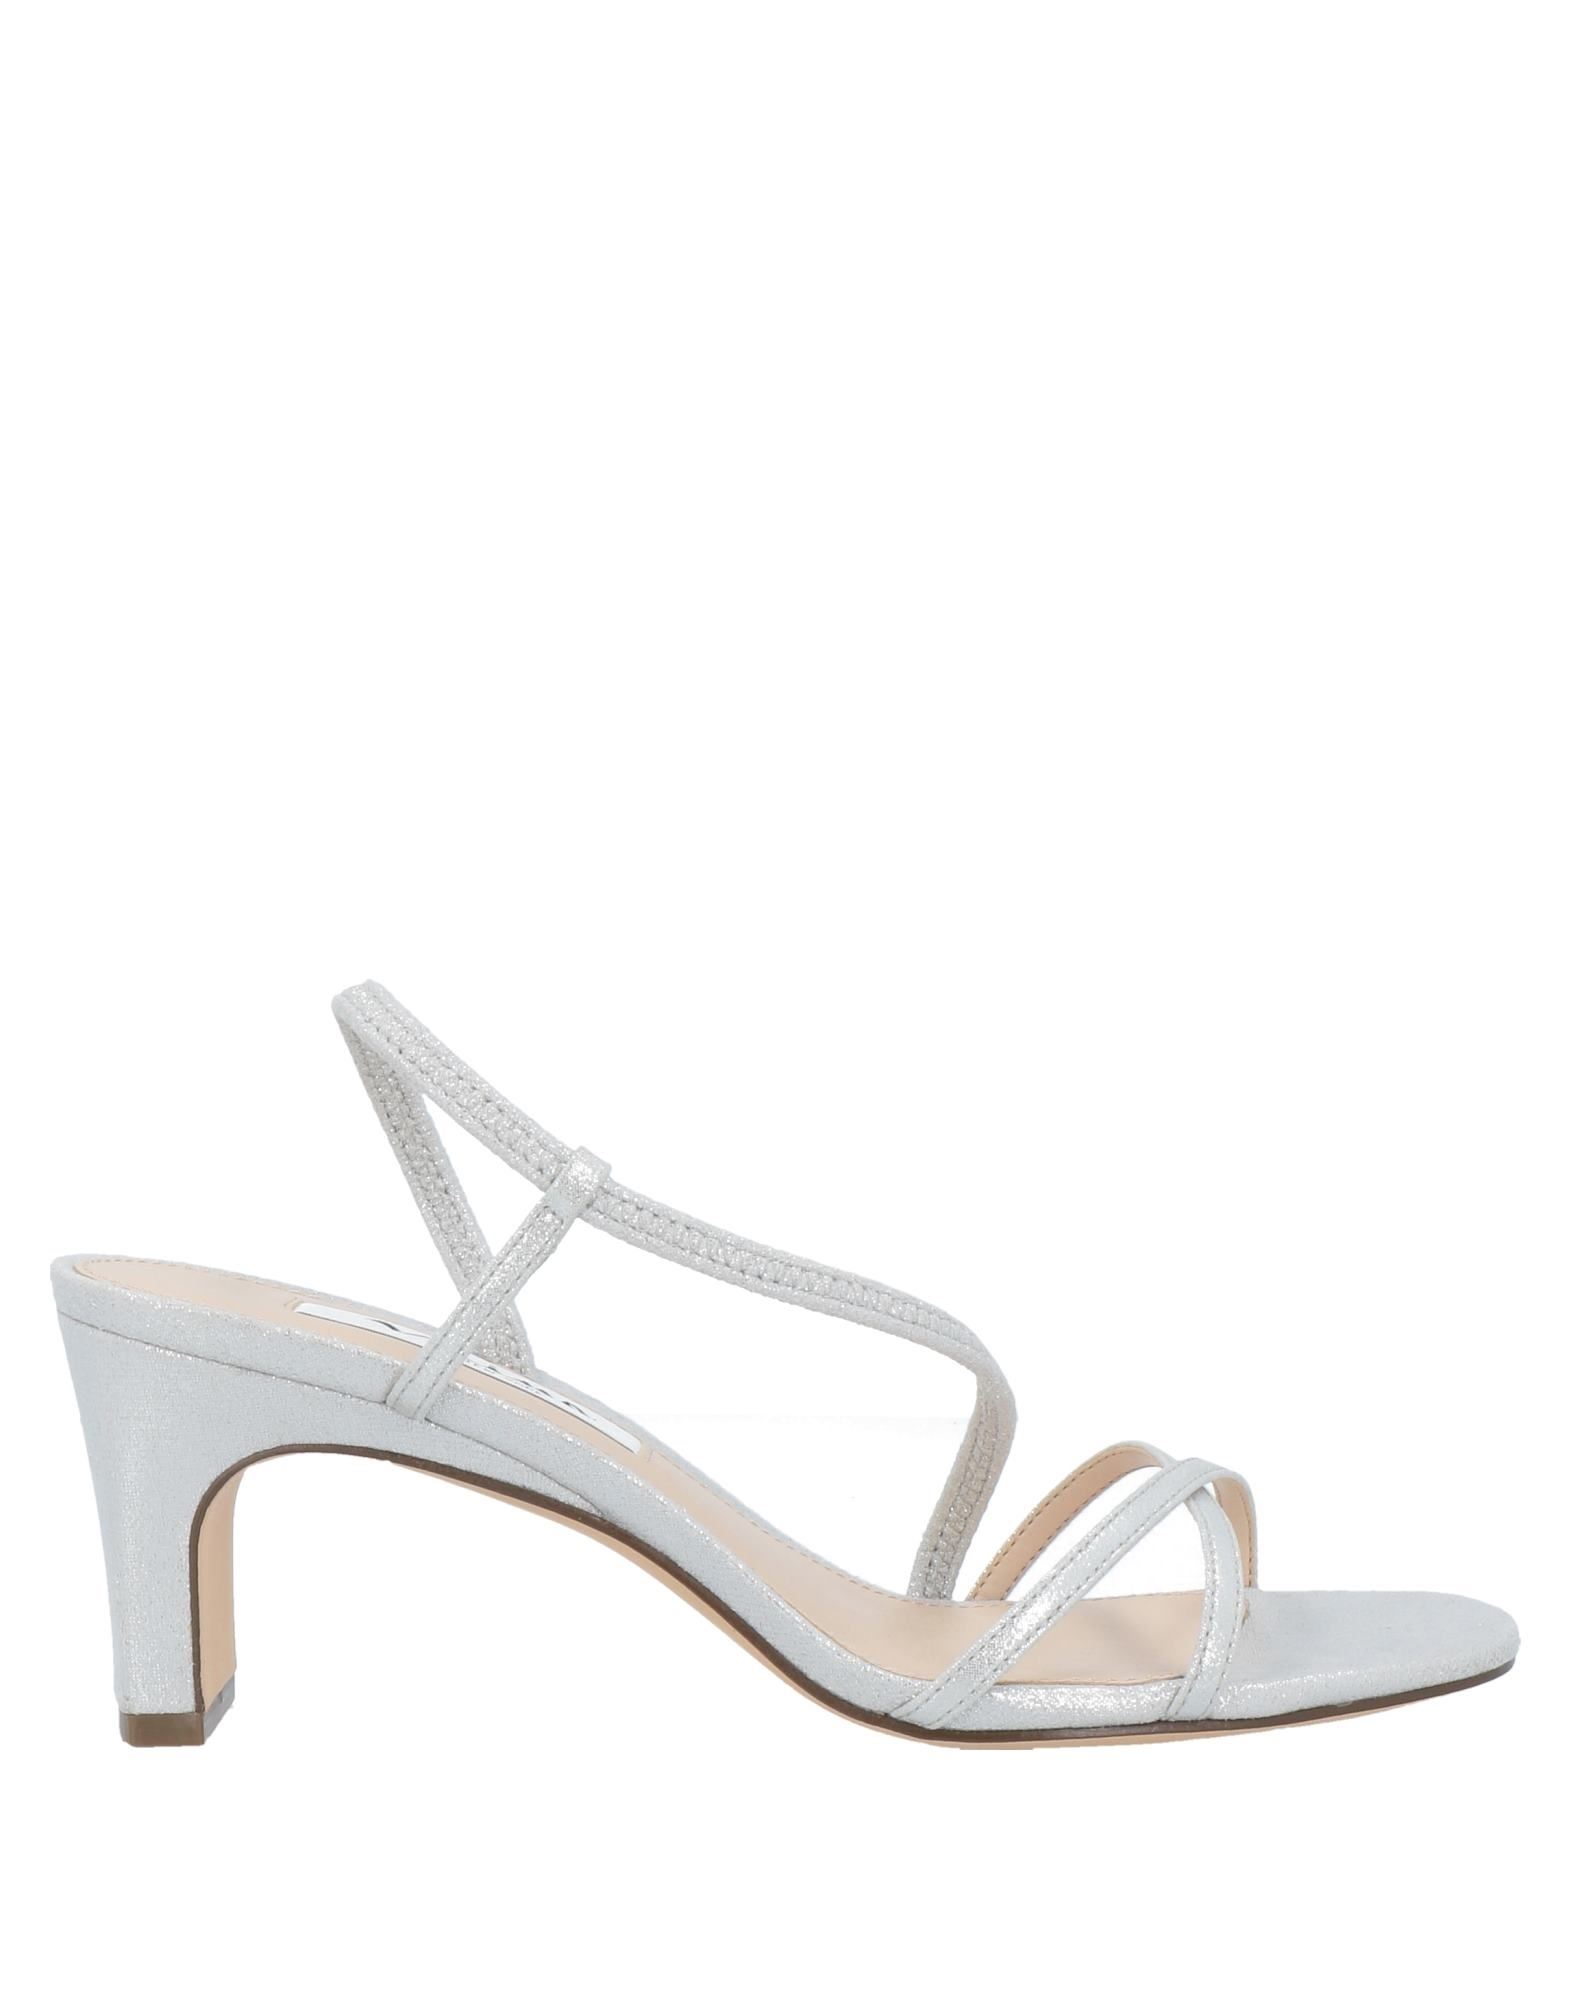 Nina New York Sandals In Light Grey